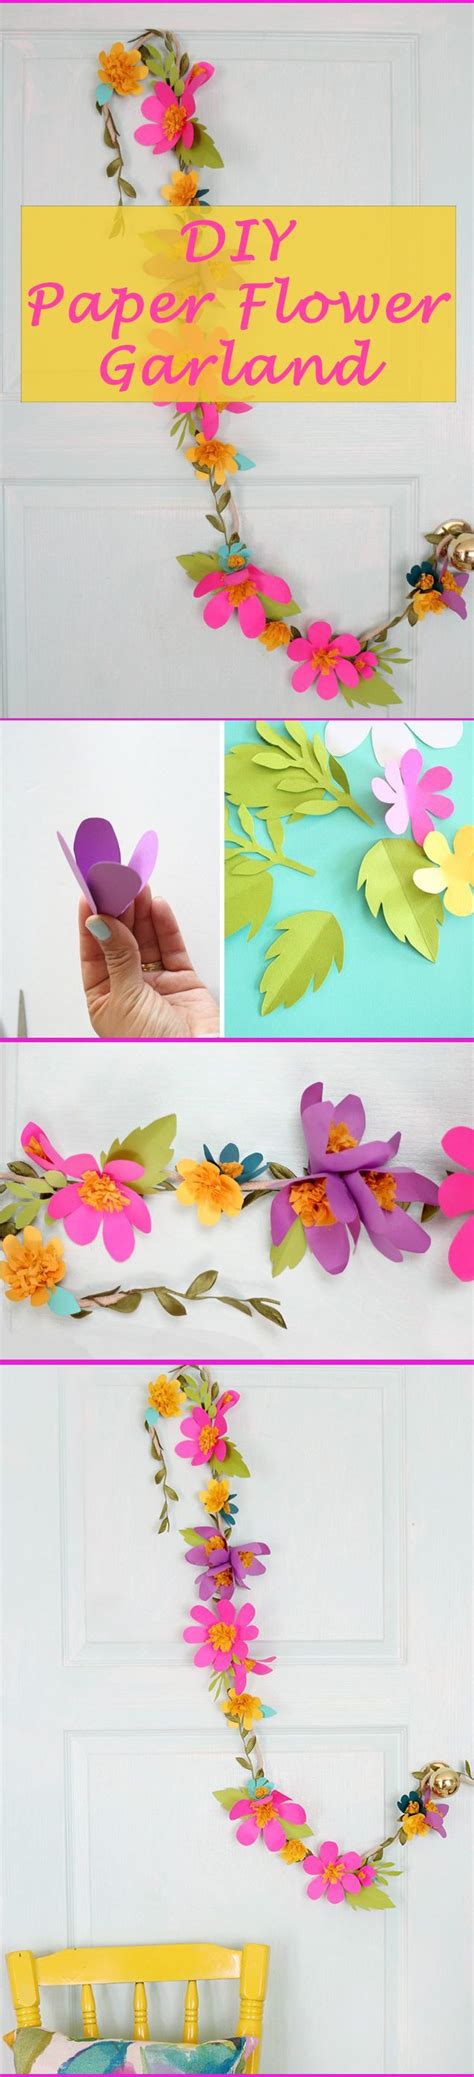 How To Make Paper Flower Garlands Ehow Paper Flower Garlands Paper